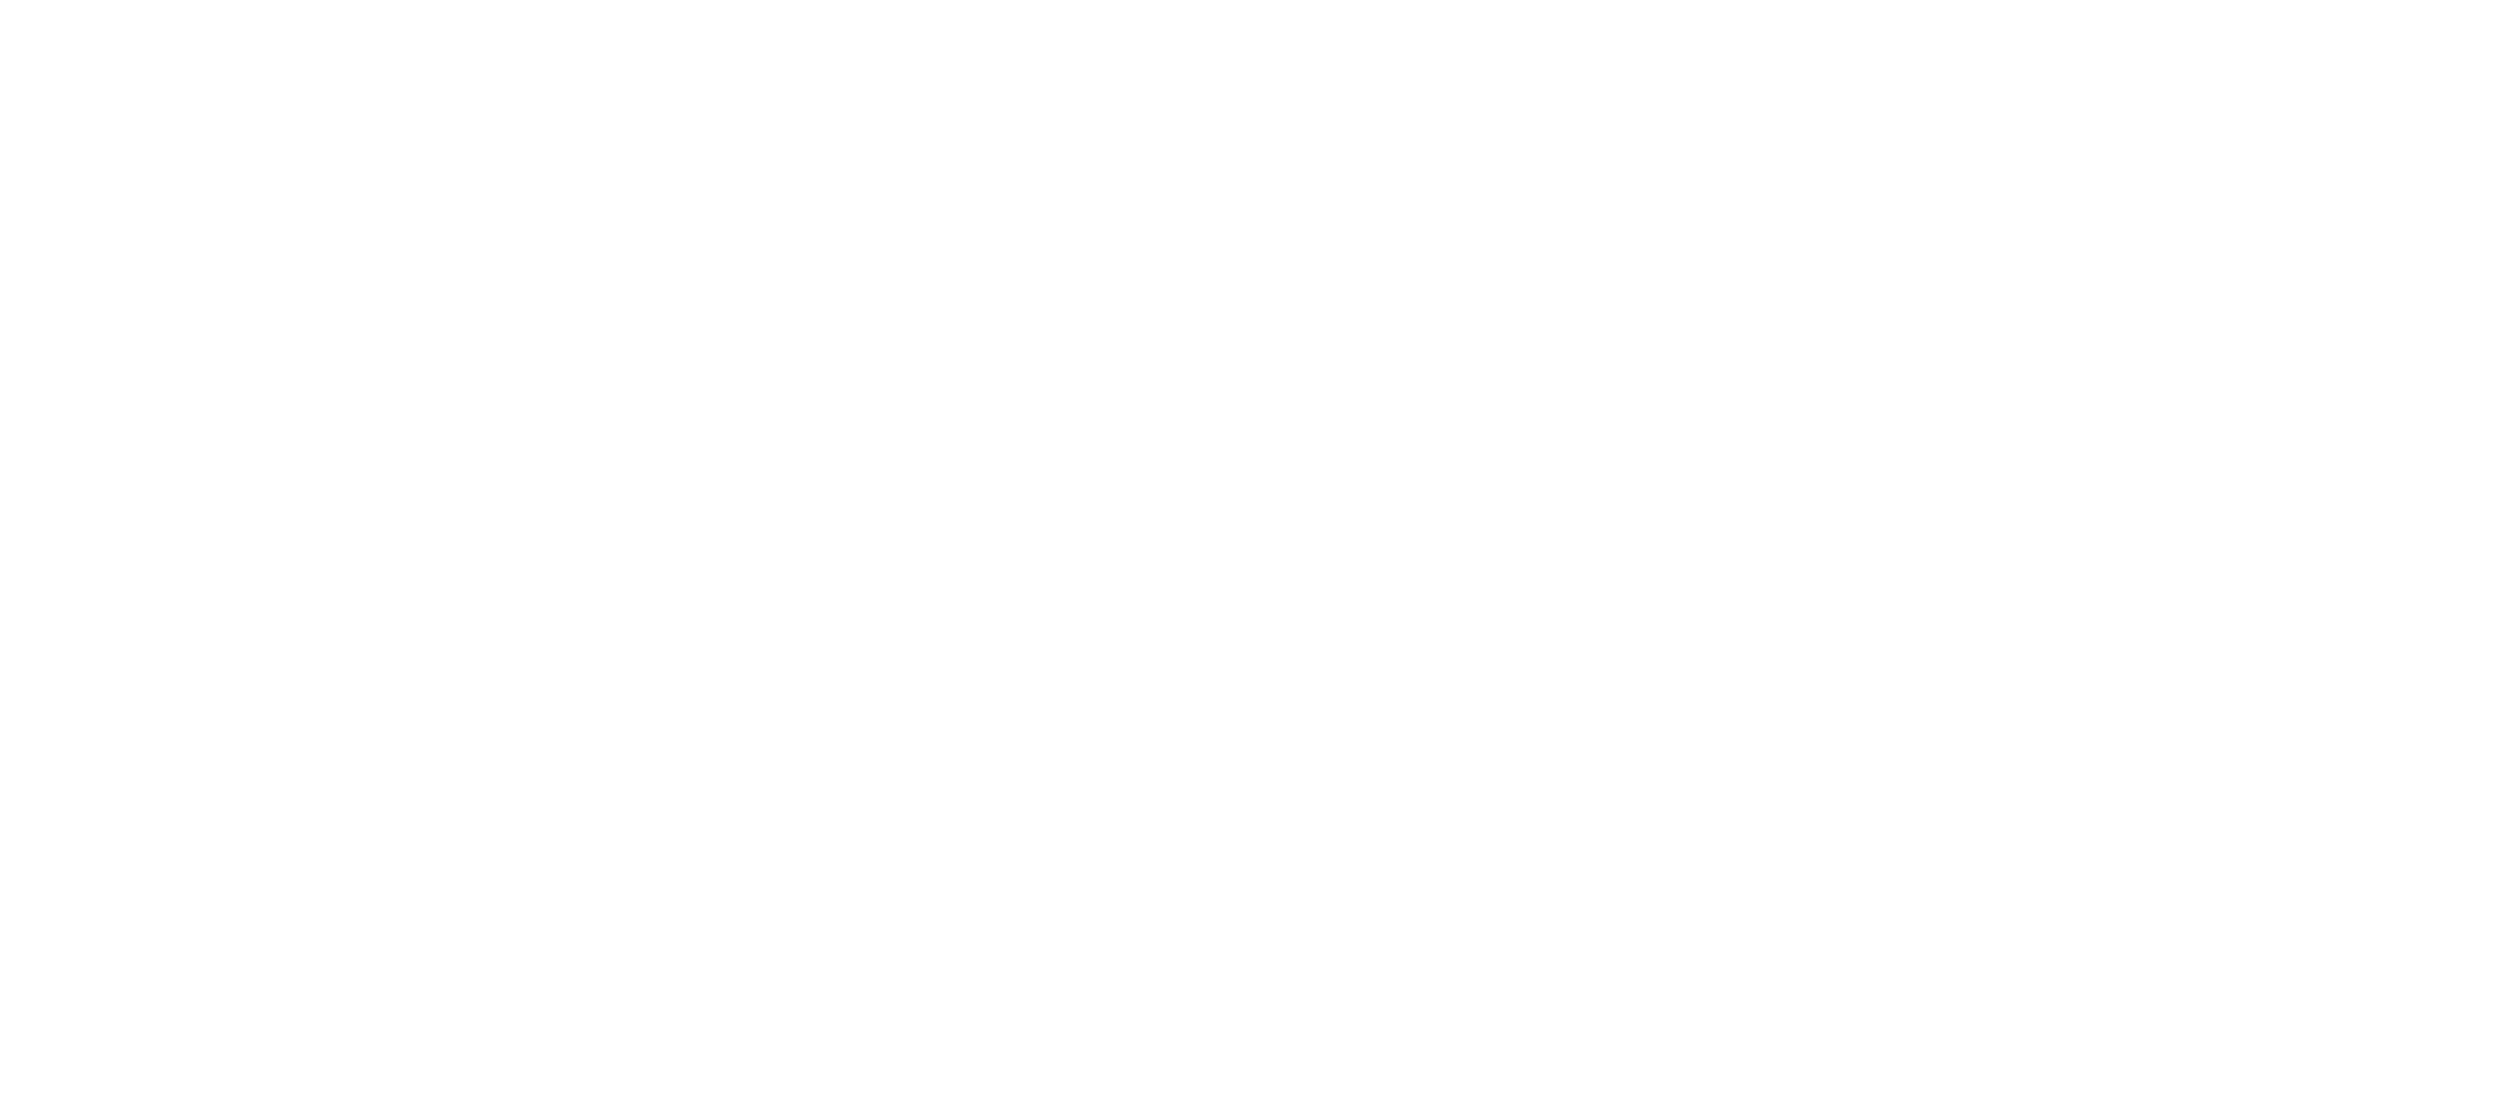 2018CCEE(深圳)雨果网跨境电商选品大会